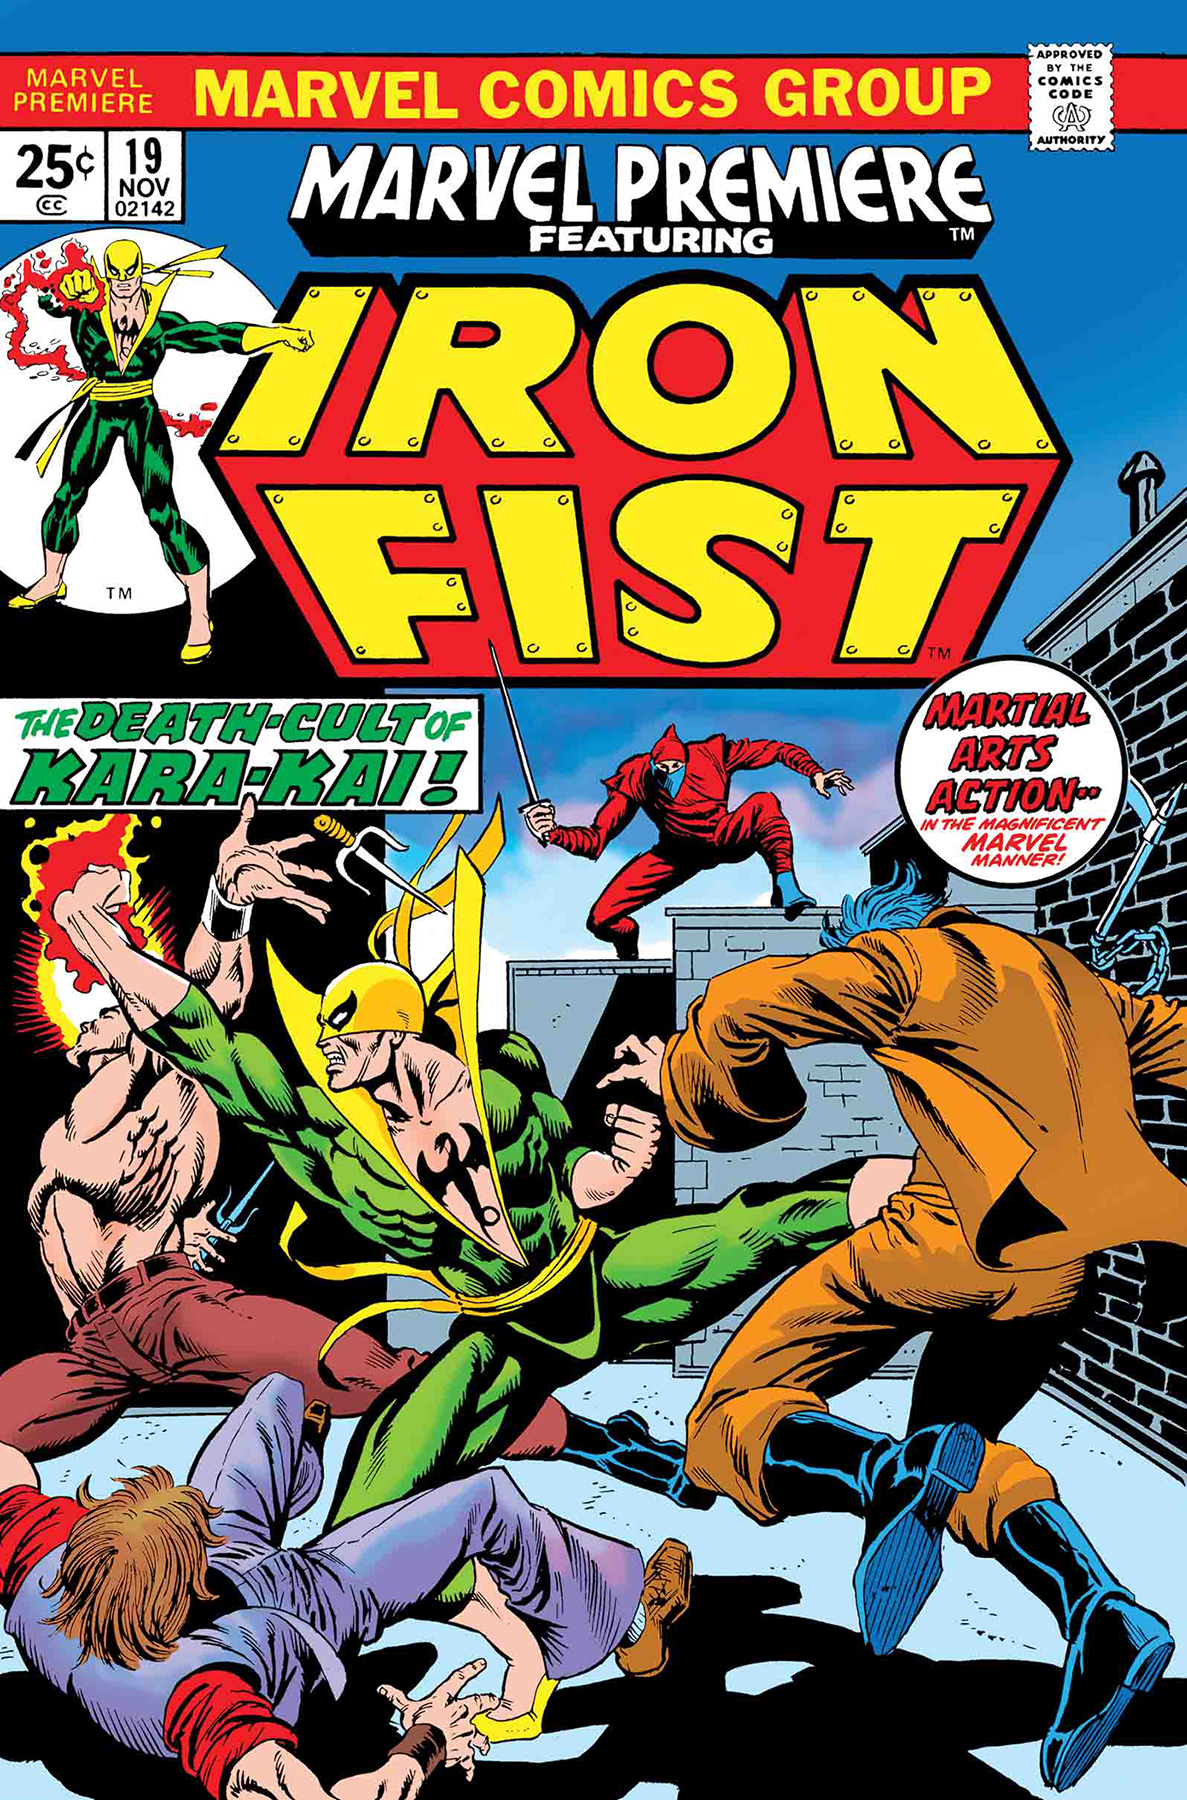 True Believers: Iron Fist Colleen Wing no. 1 (2019)